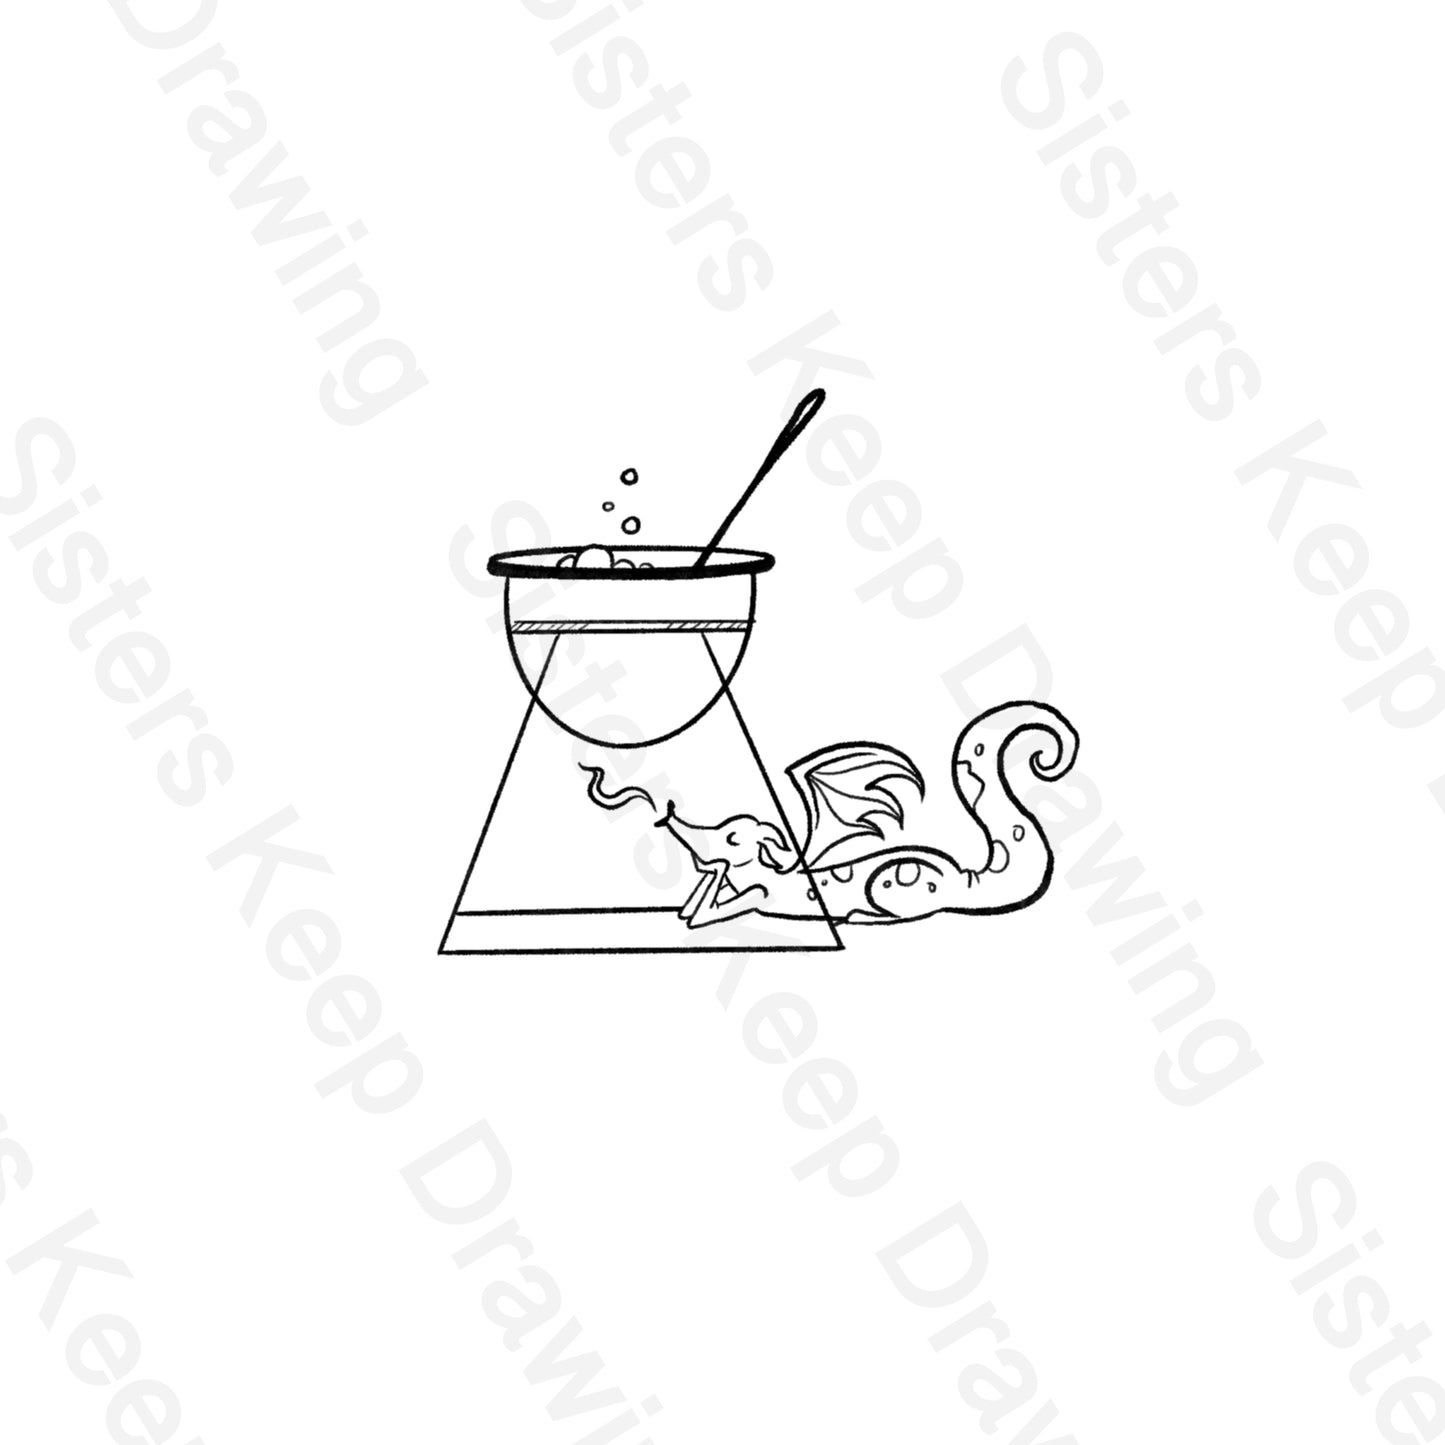 Tiny Dragon fondue-Tattoo Transparent Permission PNG- instant download digital printable artw